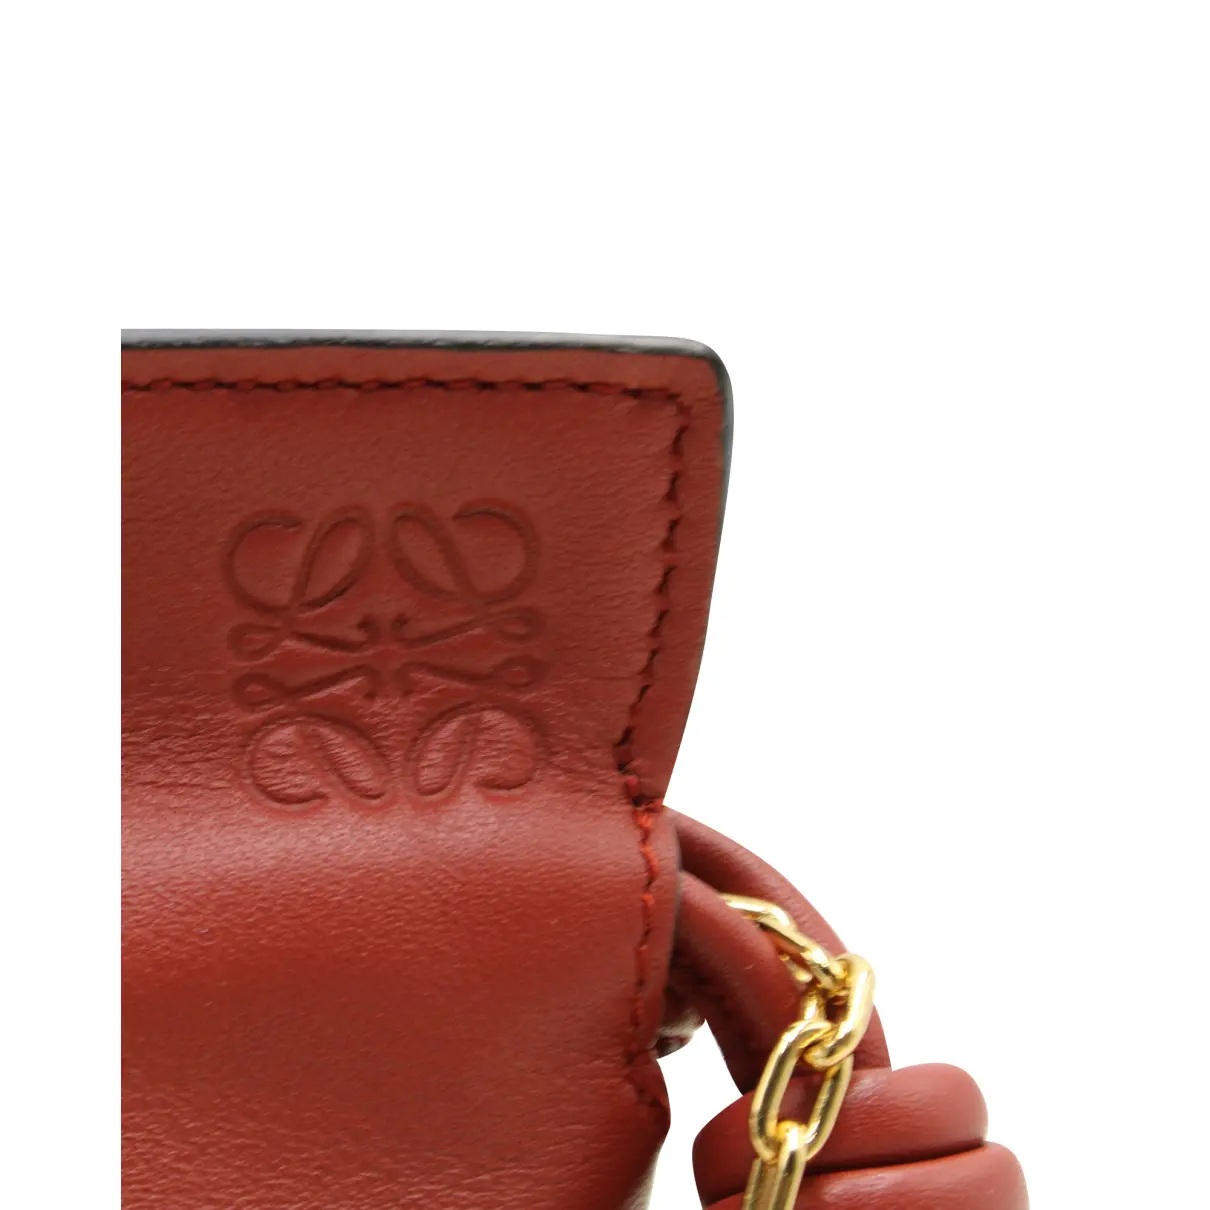 Leather satchel Loewe